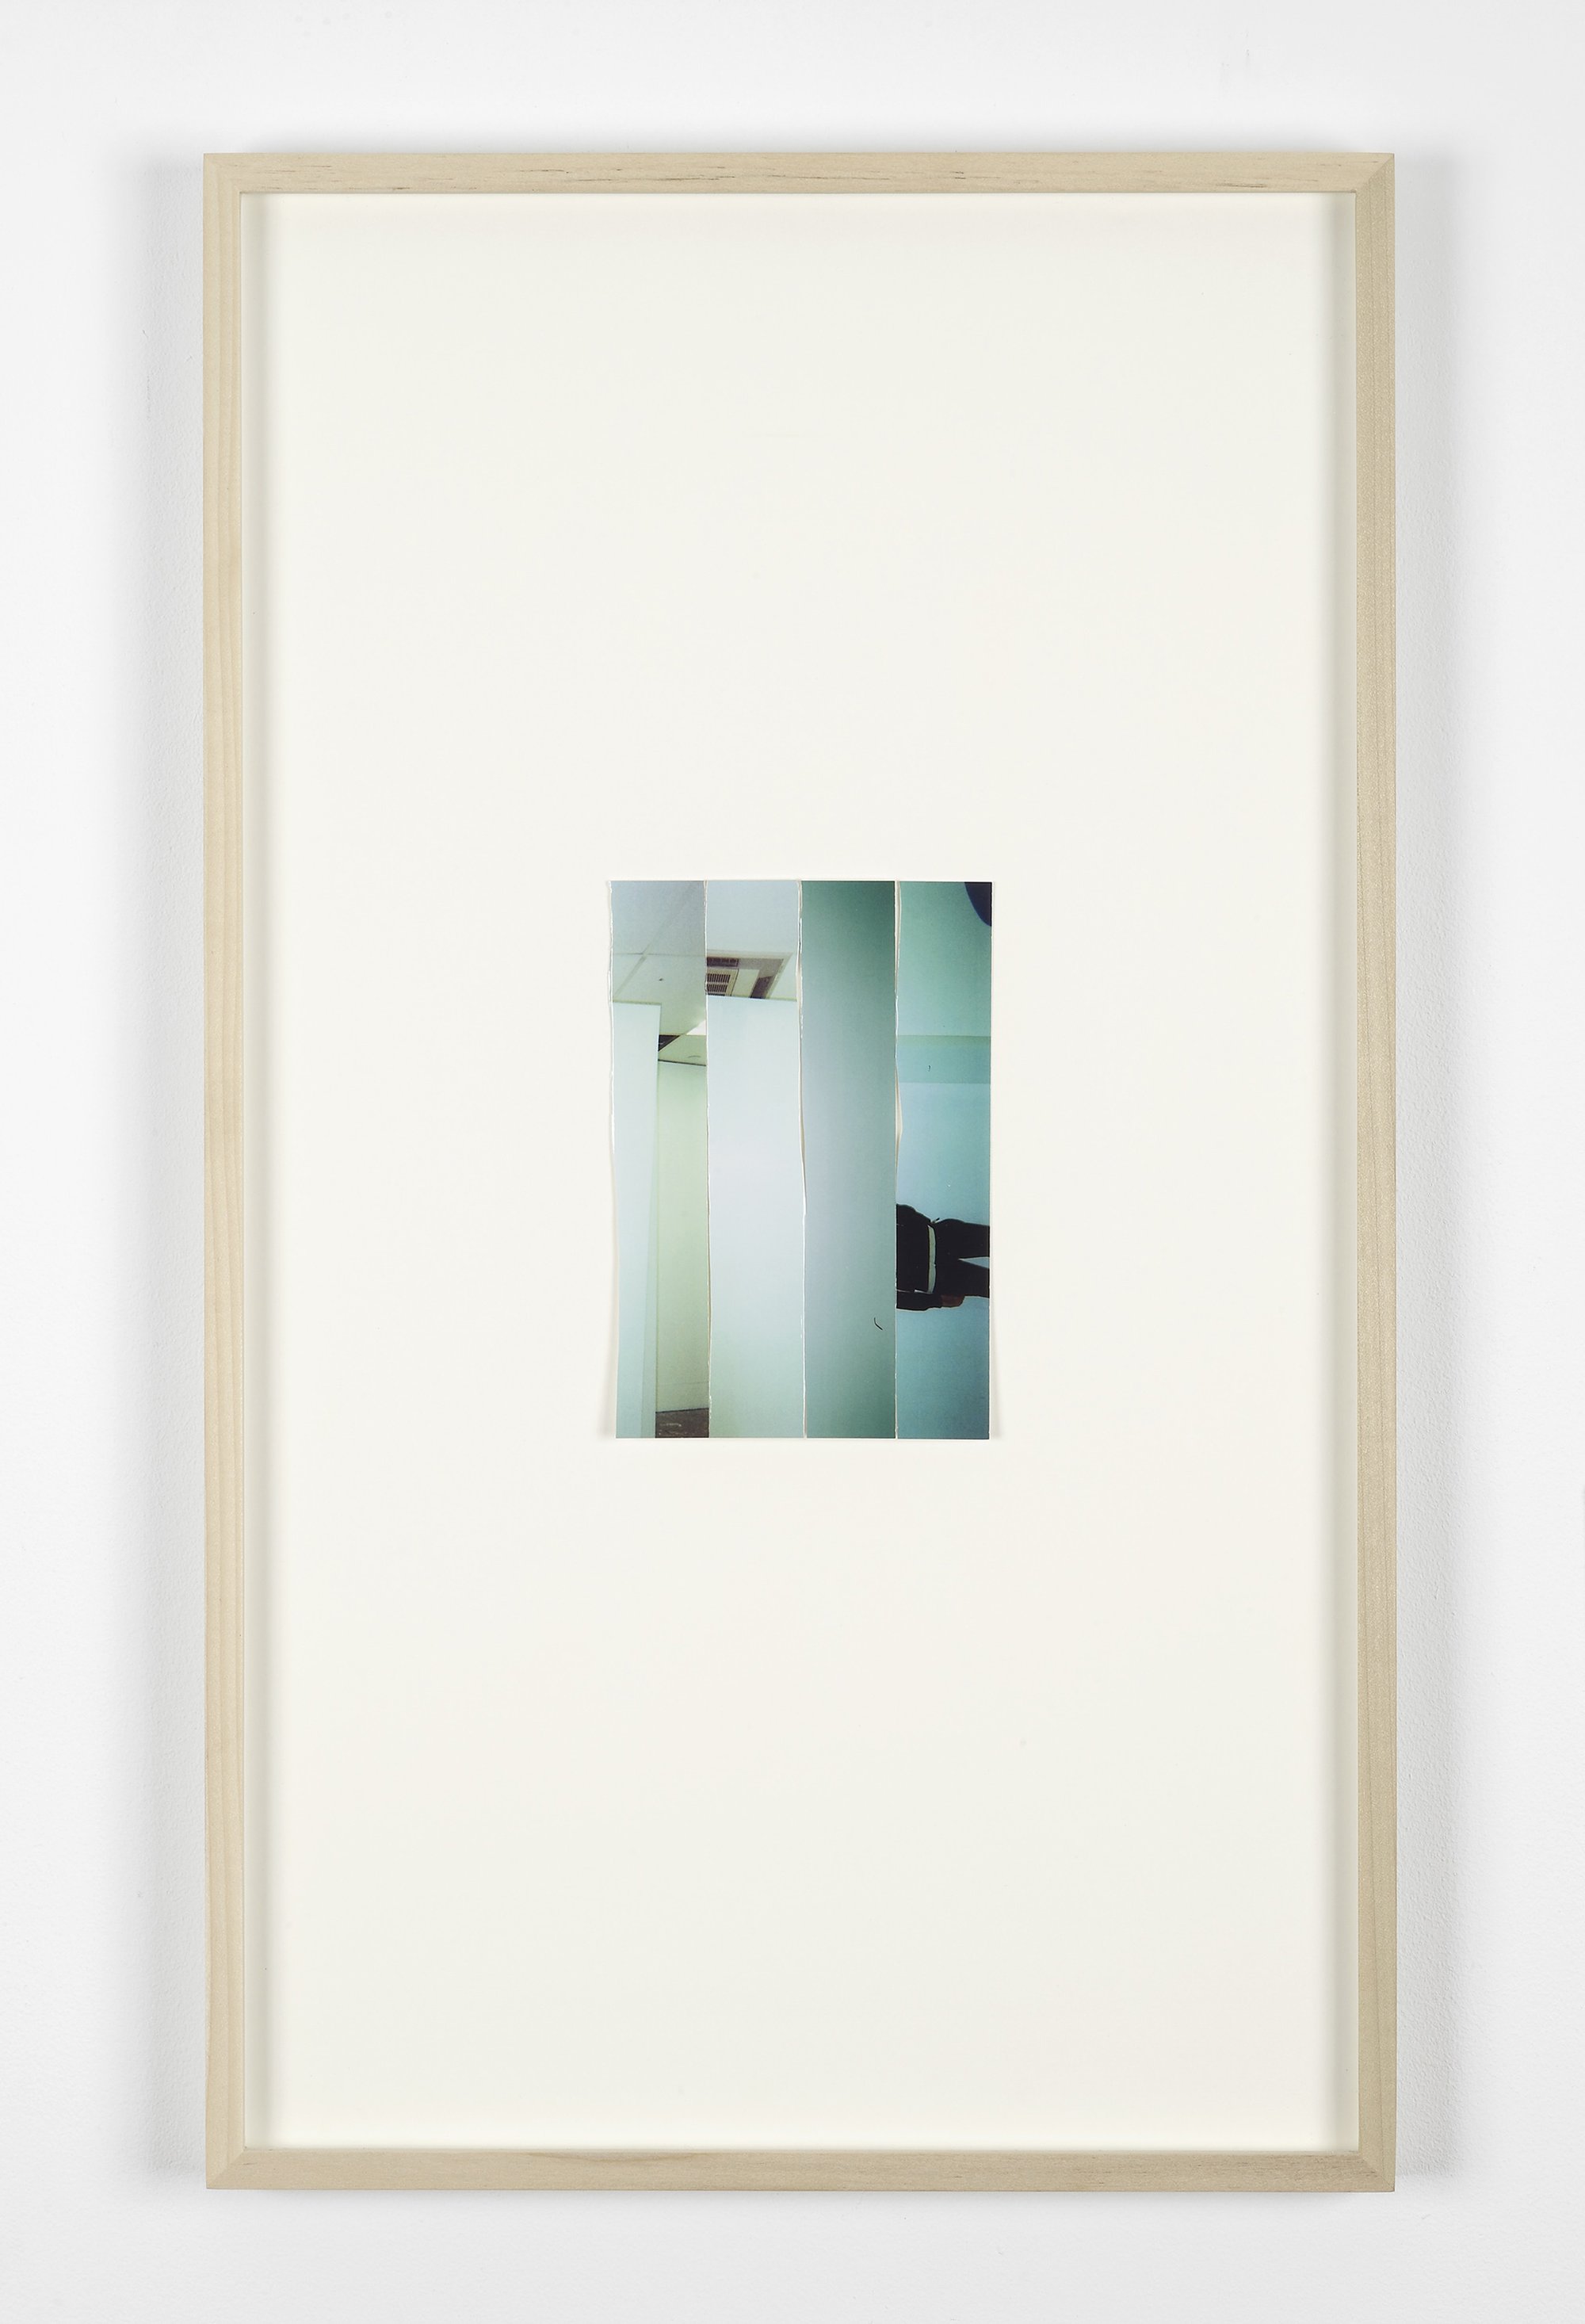 Ian Law, Manual, photograph, tape framed, 55 x 32 x 2.5 cm (21 2/3 x 12 2/3 x 1 in), 2011